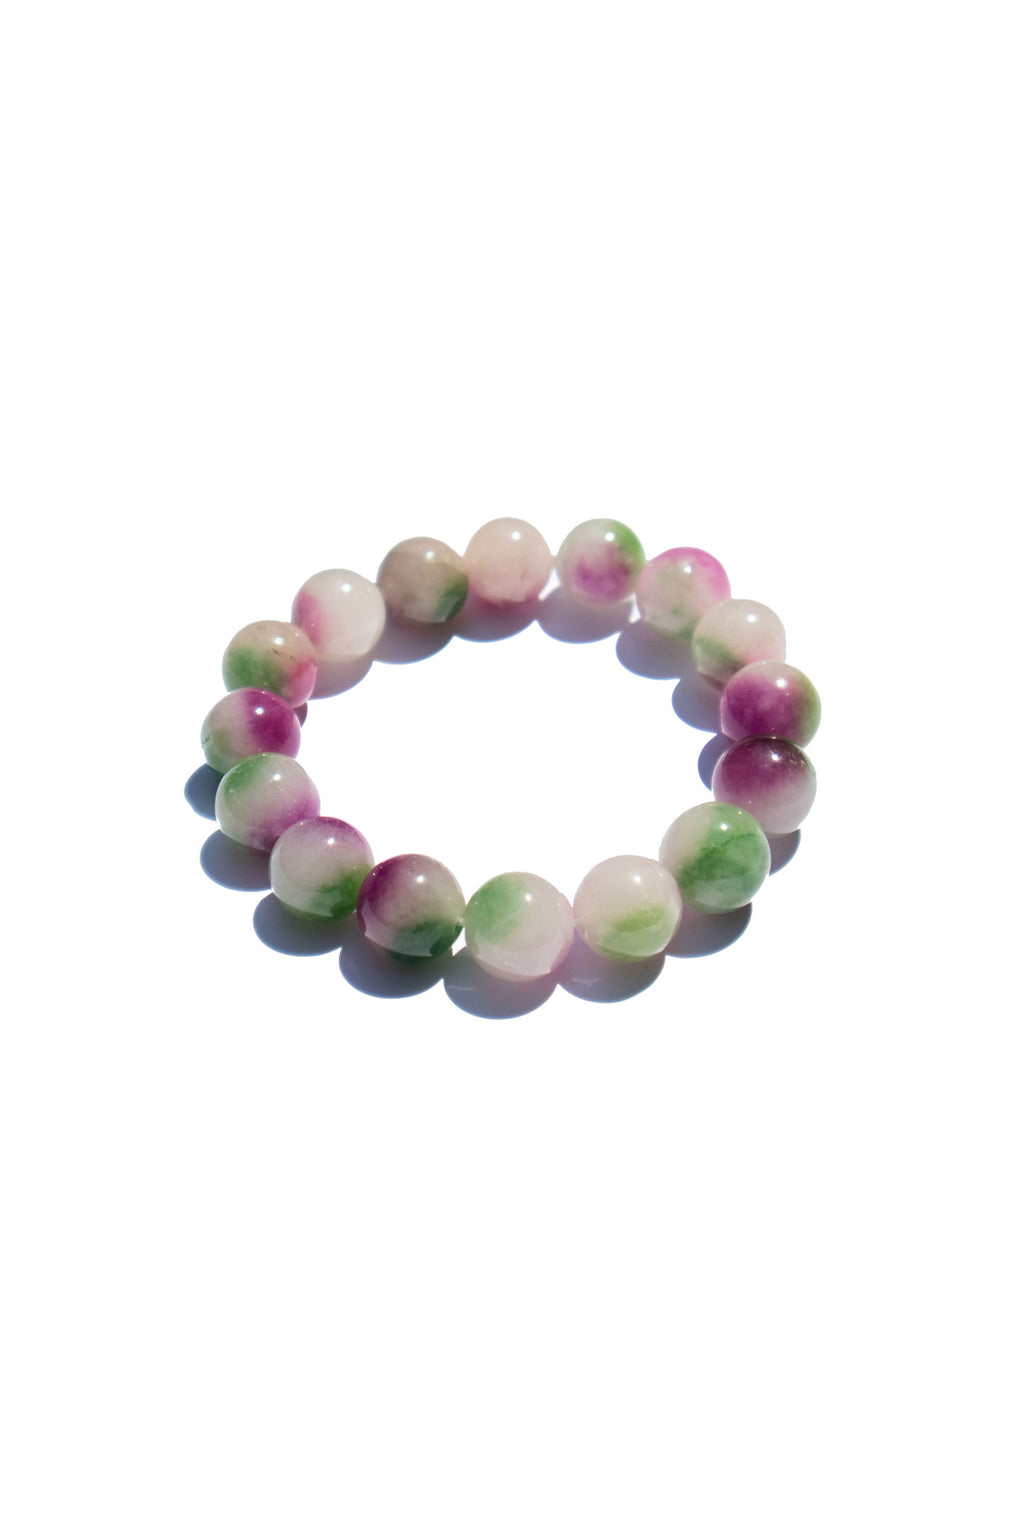 seree-beaded-bracelet-in-purple-green-colorful-quartzite